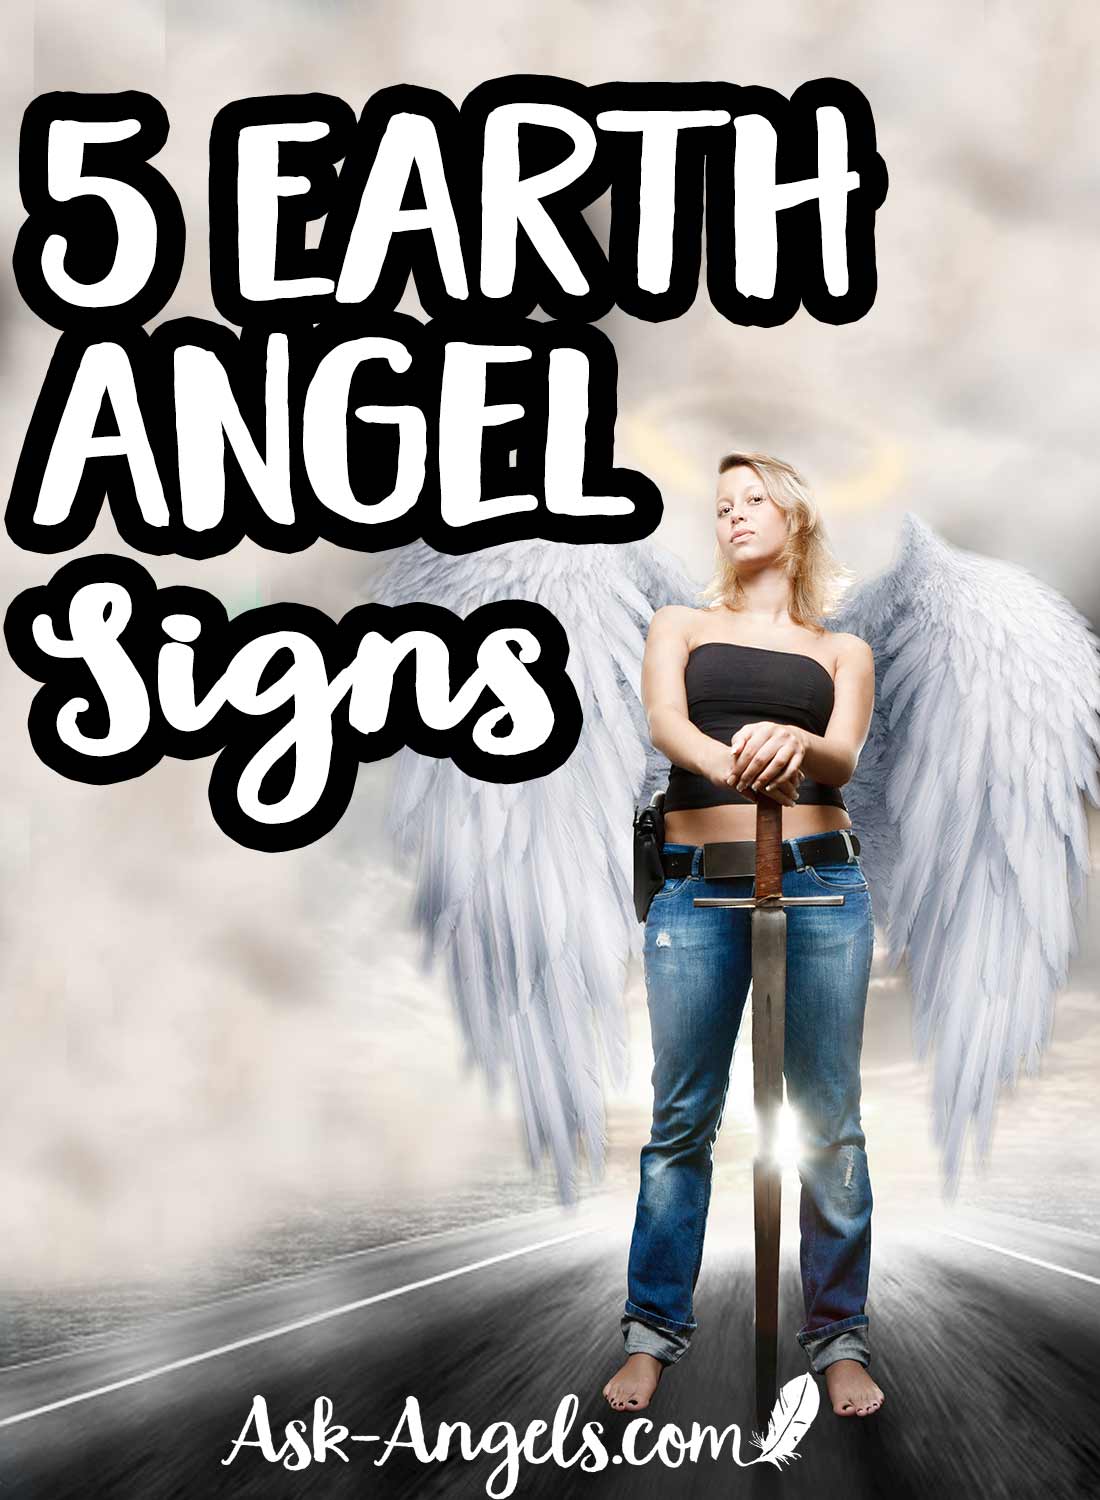 Earth Angel Signs